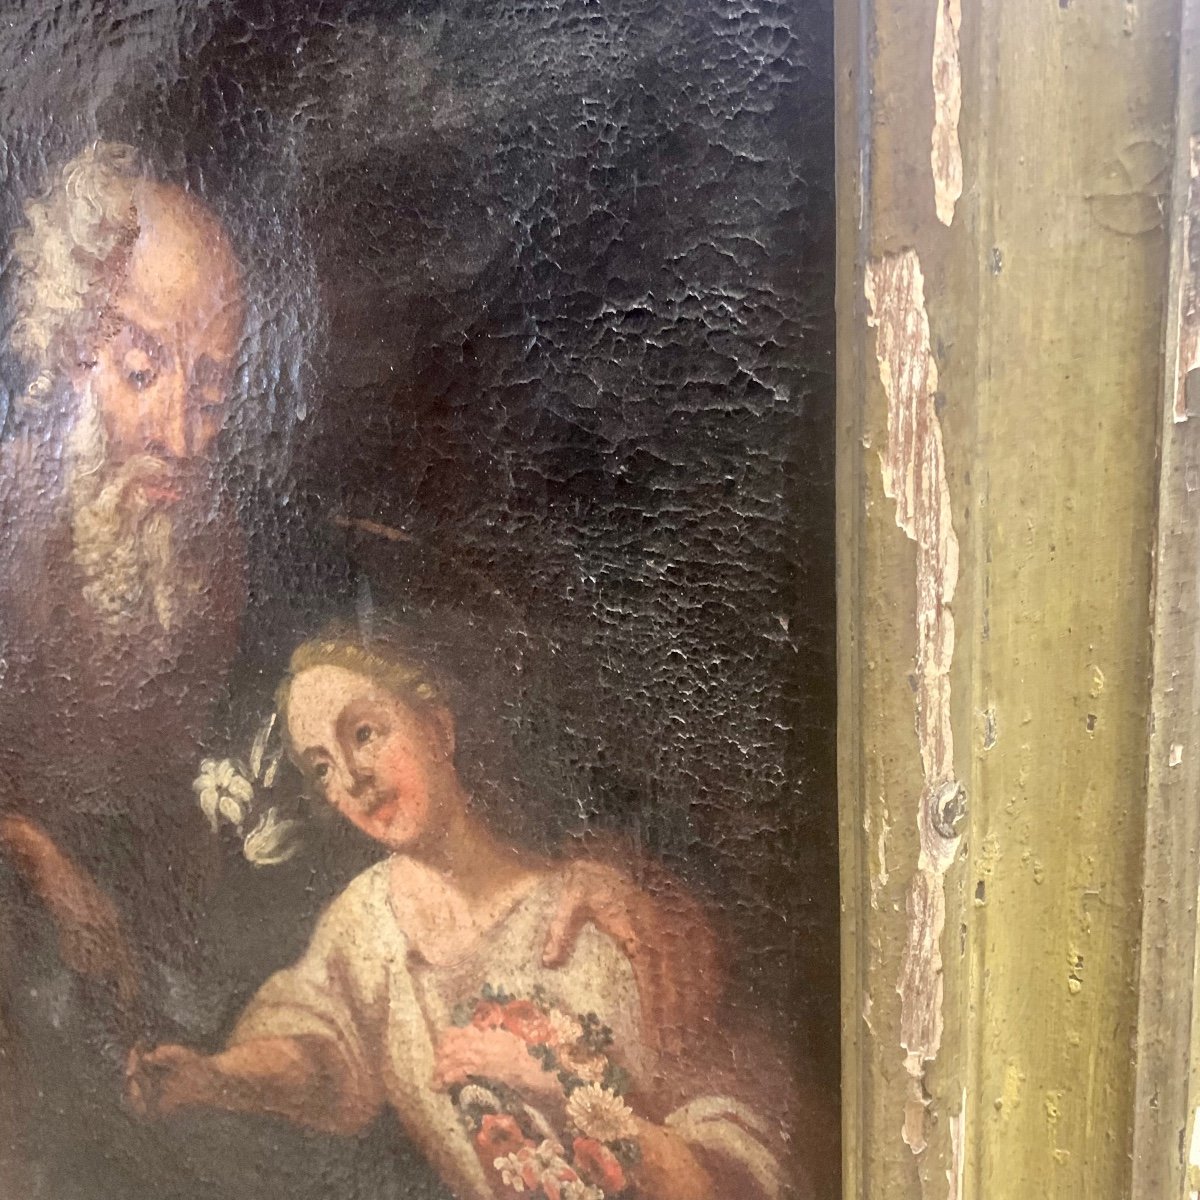 Religious Painting (saint Joseph Or Saint Peter?) And The Child Jesus - XVII Century-photo-6